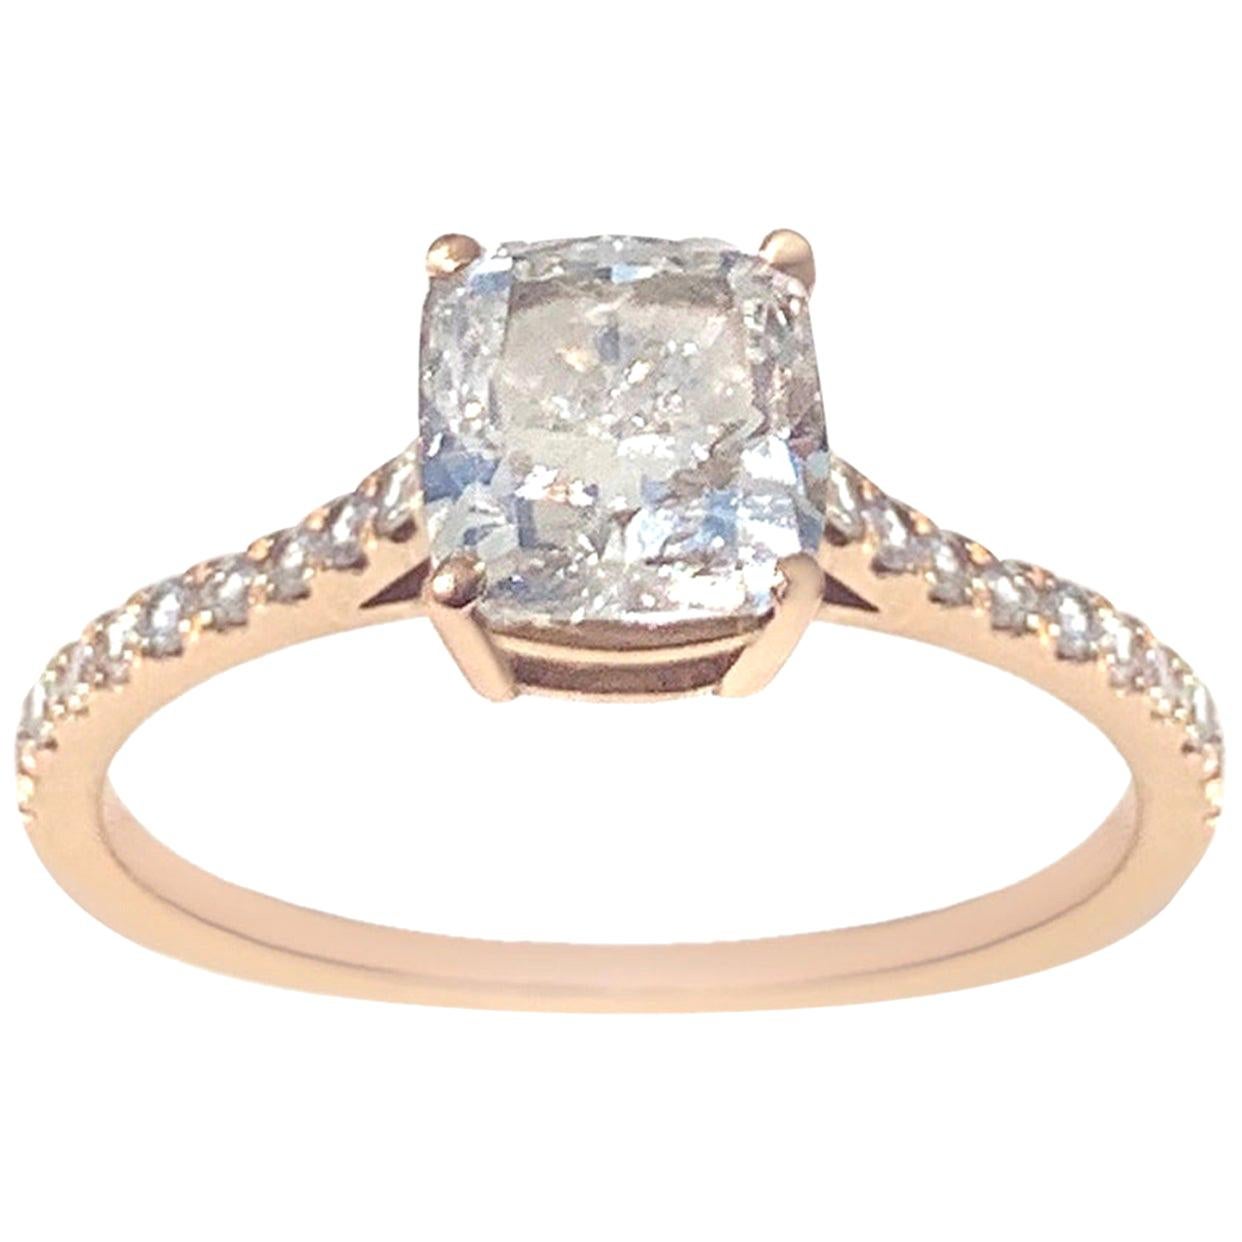 GIA Certified 1.74 Carat Cushion Cut Diamond Engagement Ring